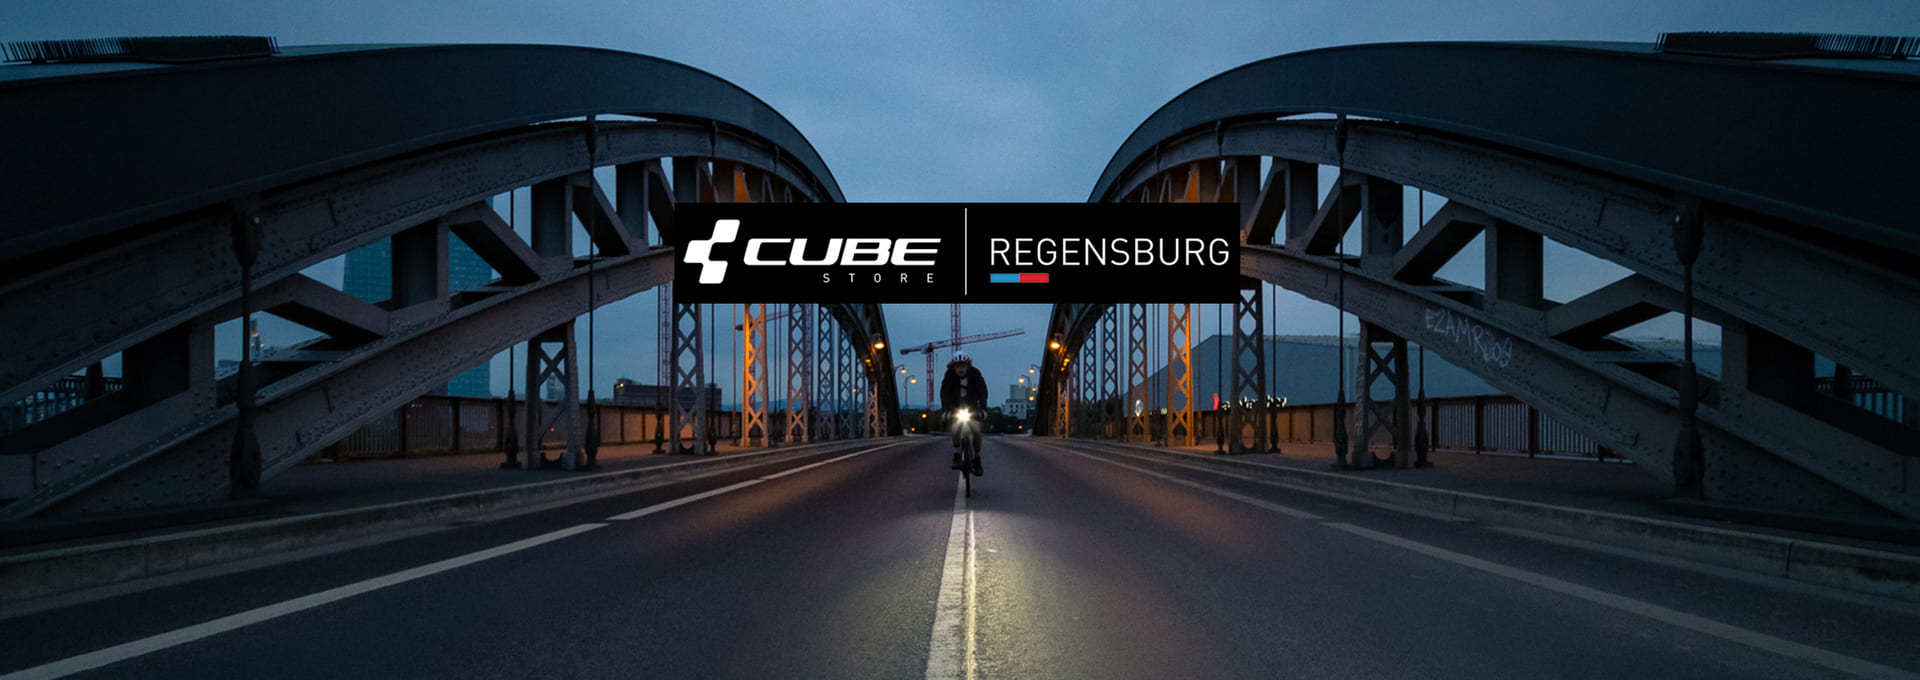 https://cube-store-regensburg.awag-it.de/kontakte